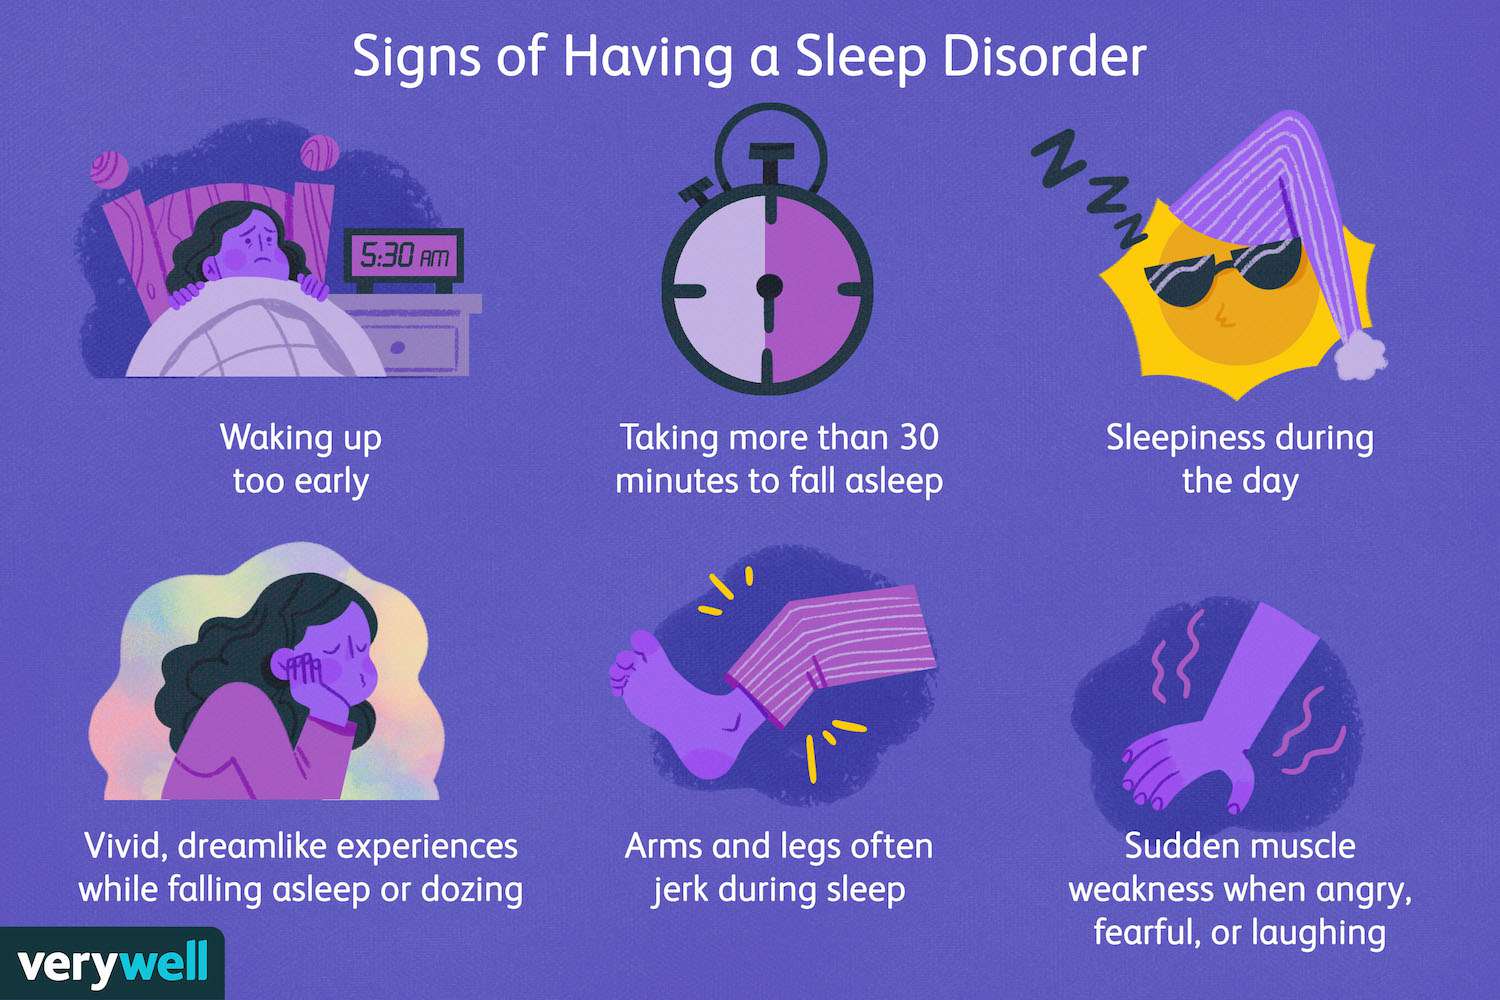 How do sleep disorders affect health and daily life?